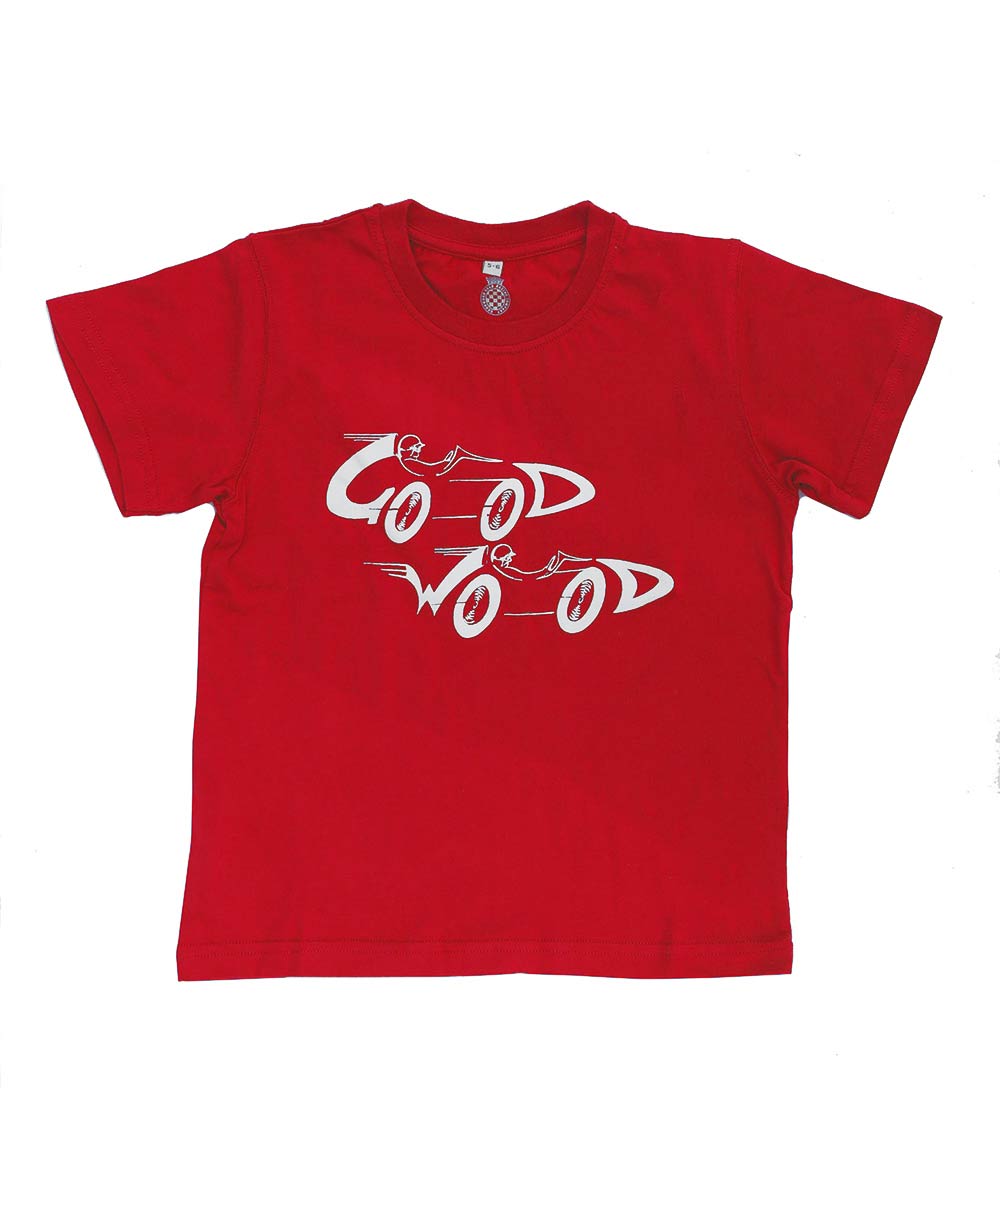 Goodwood Twin Cartoon Cars Red Cotton Childrens T-Shirt